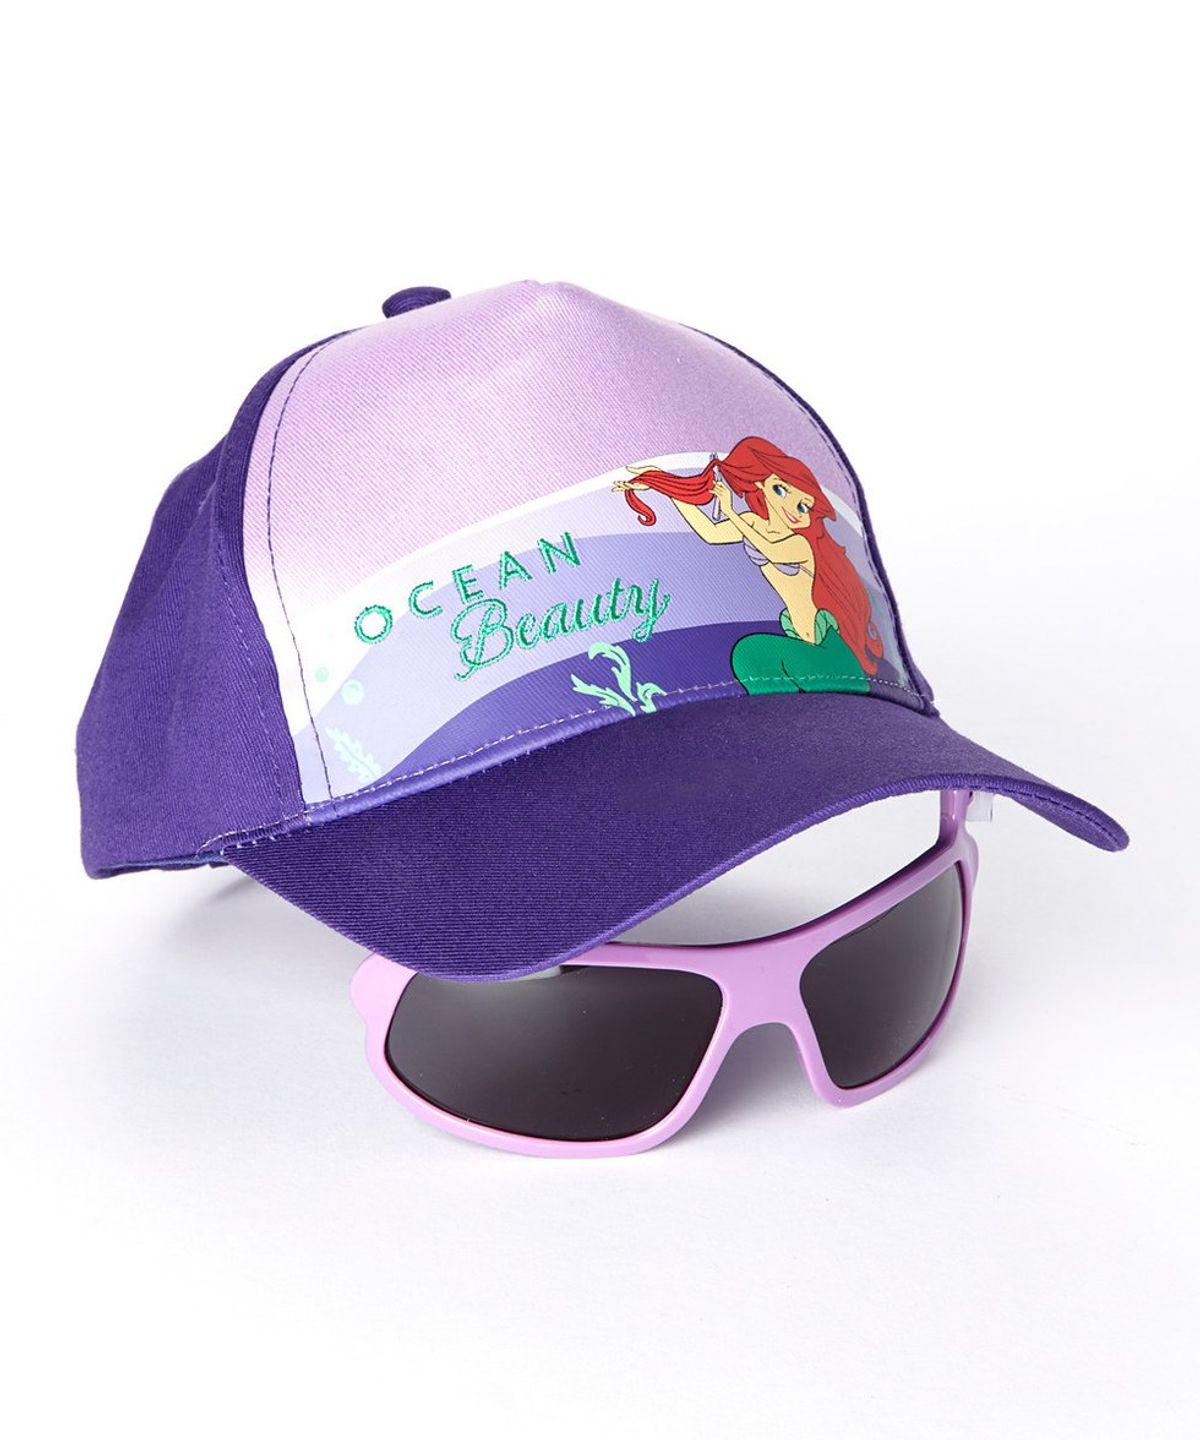 Baseball Caps Vs. Sunglasses